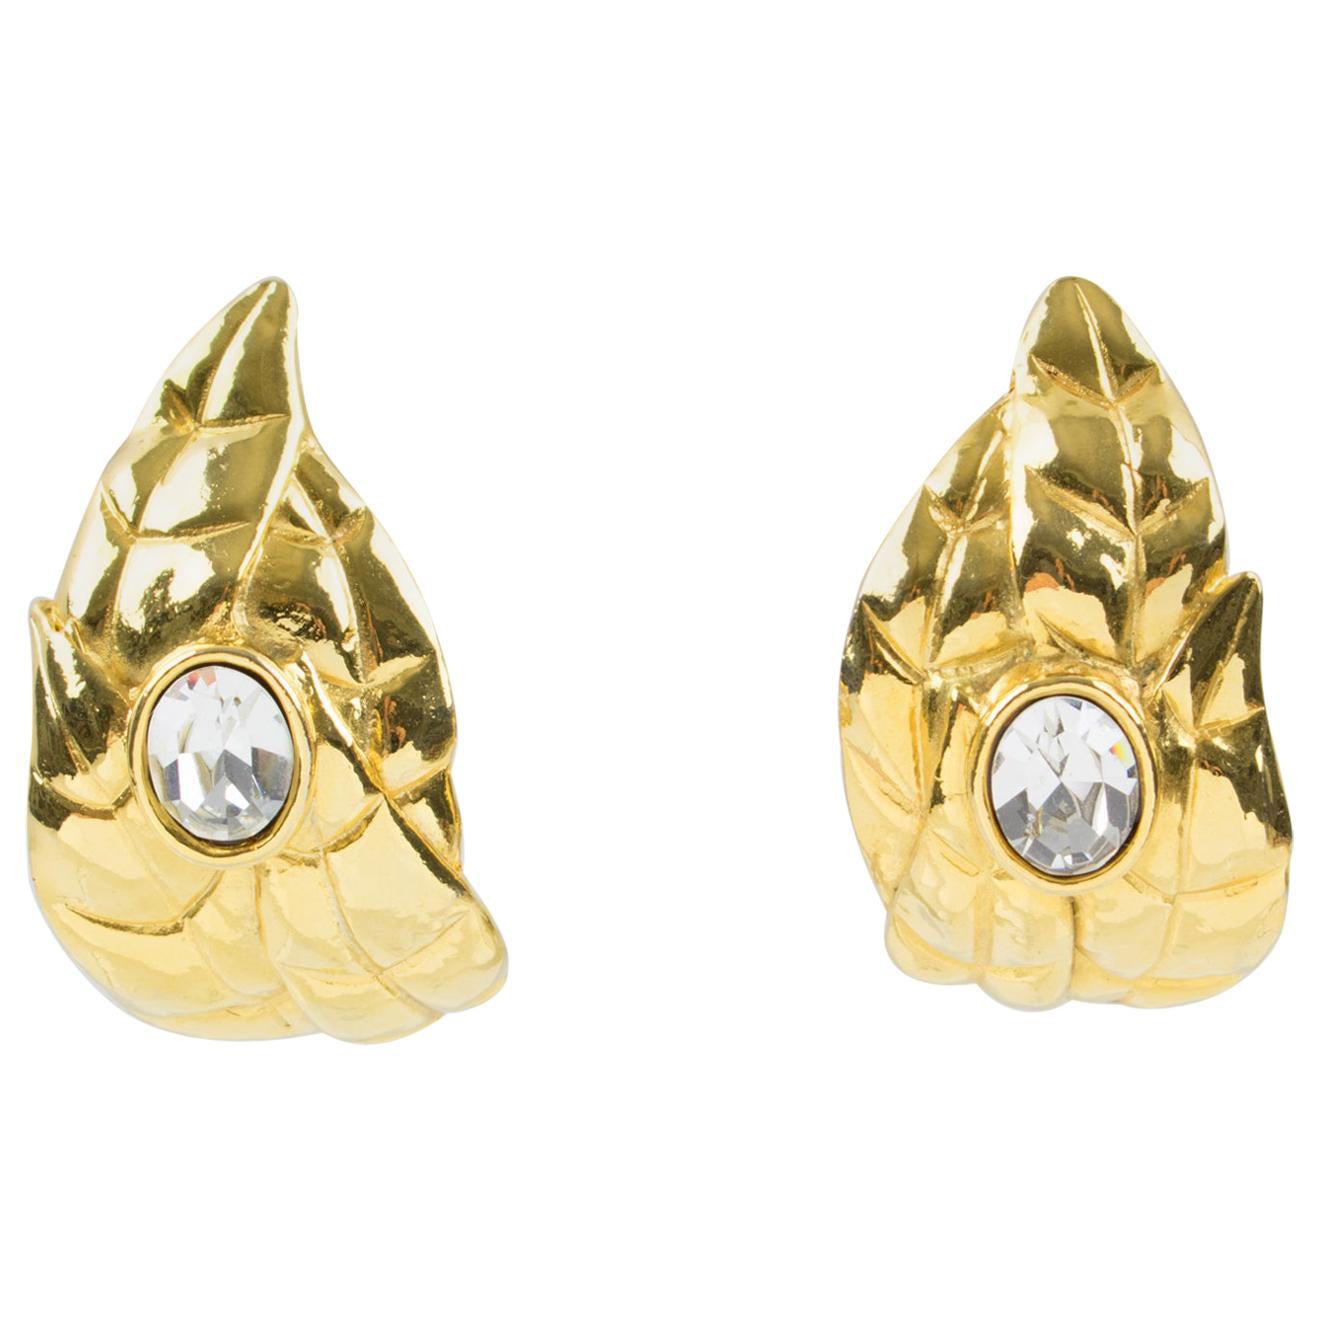 Ines de la Fressange Paris Jeweled Clip Earrings Gilt Metal Carved Leaf For Sale